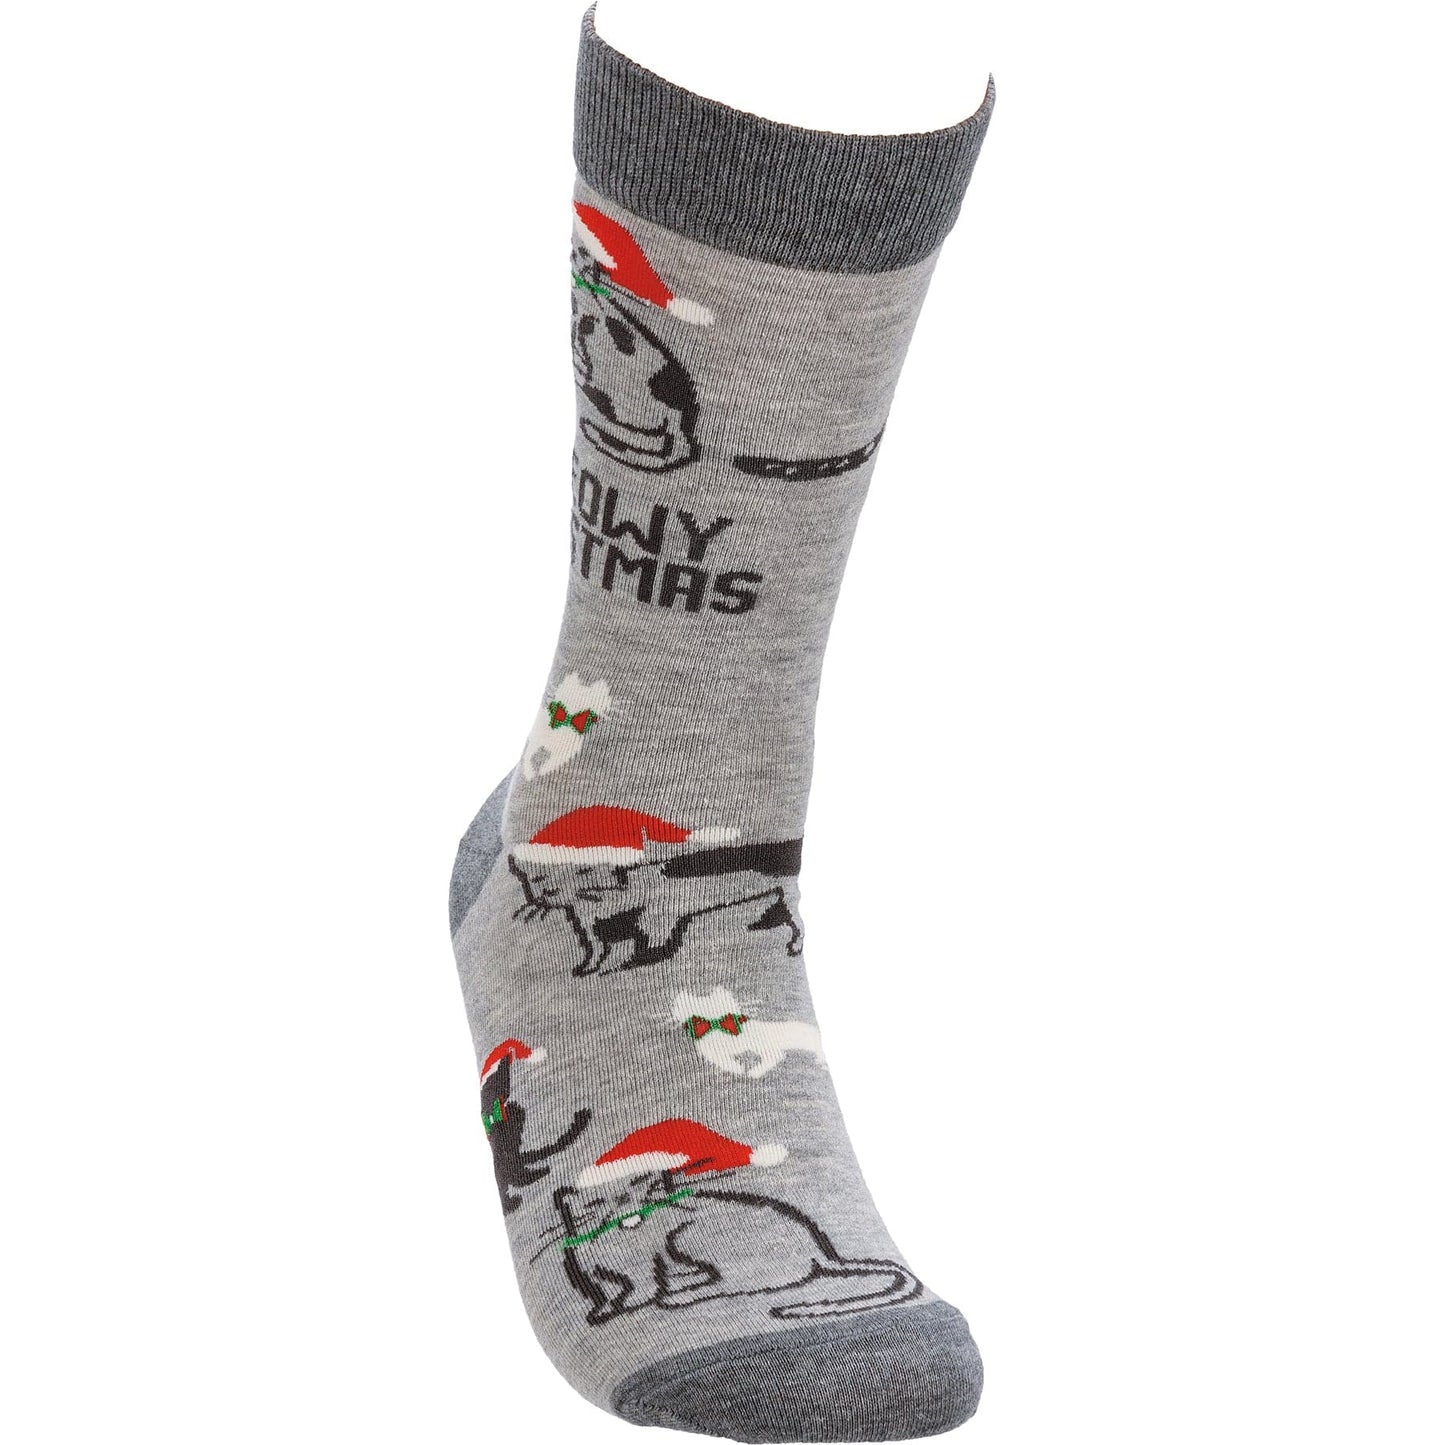 Socks One Size Fits Most Socks - Meowy Christmas PBK-113515